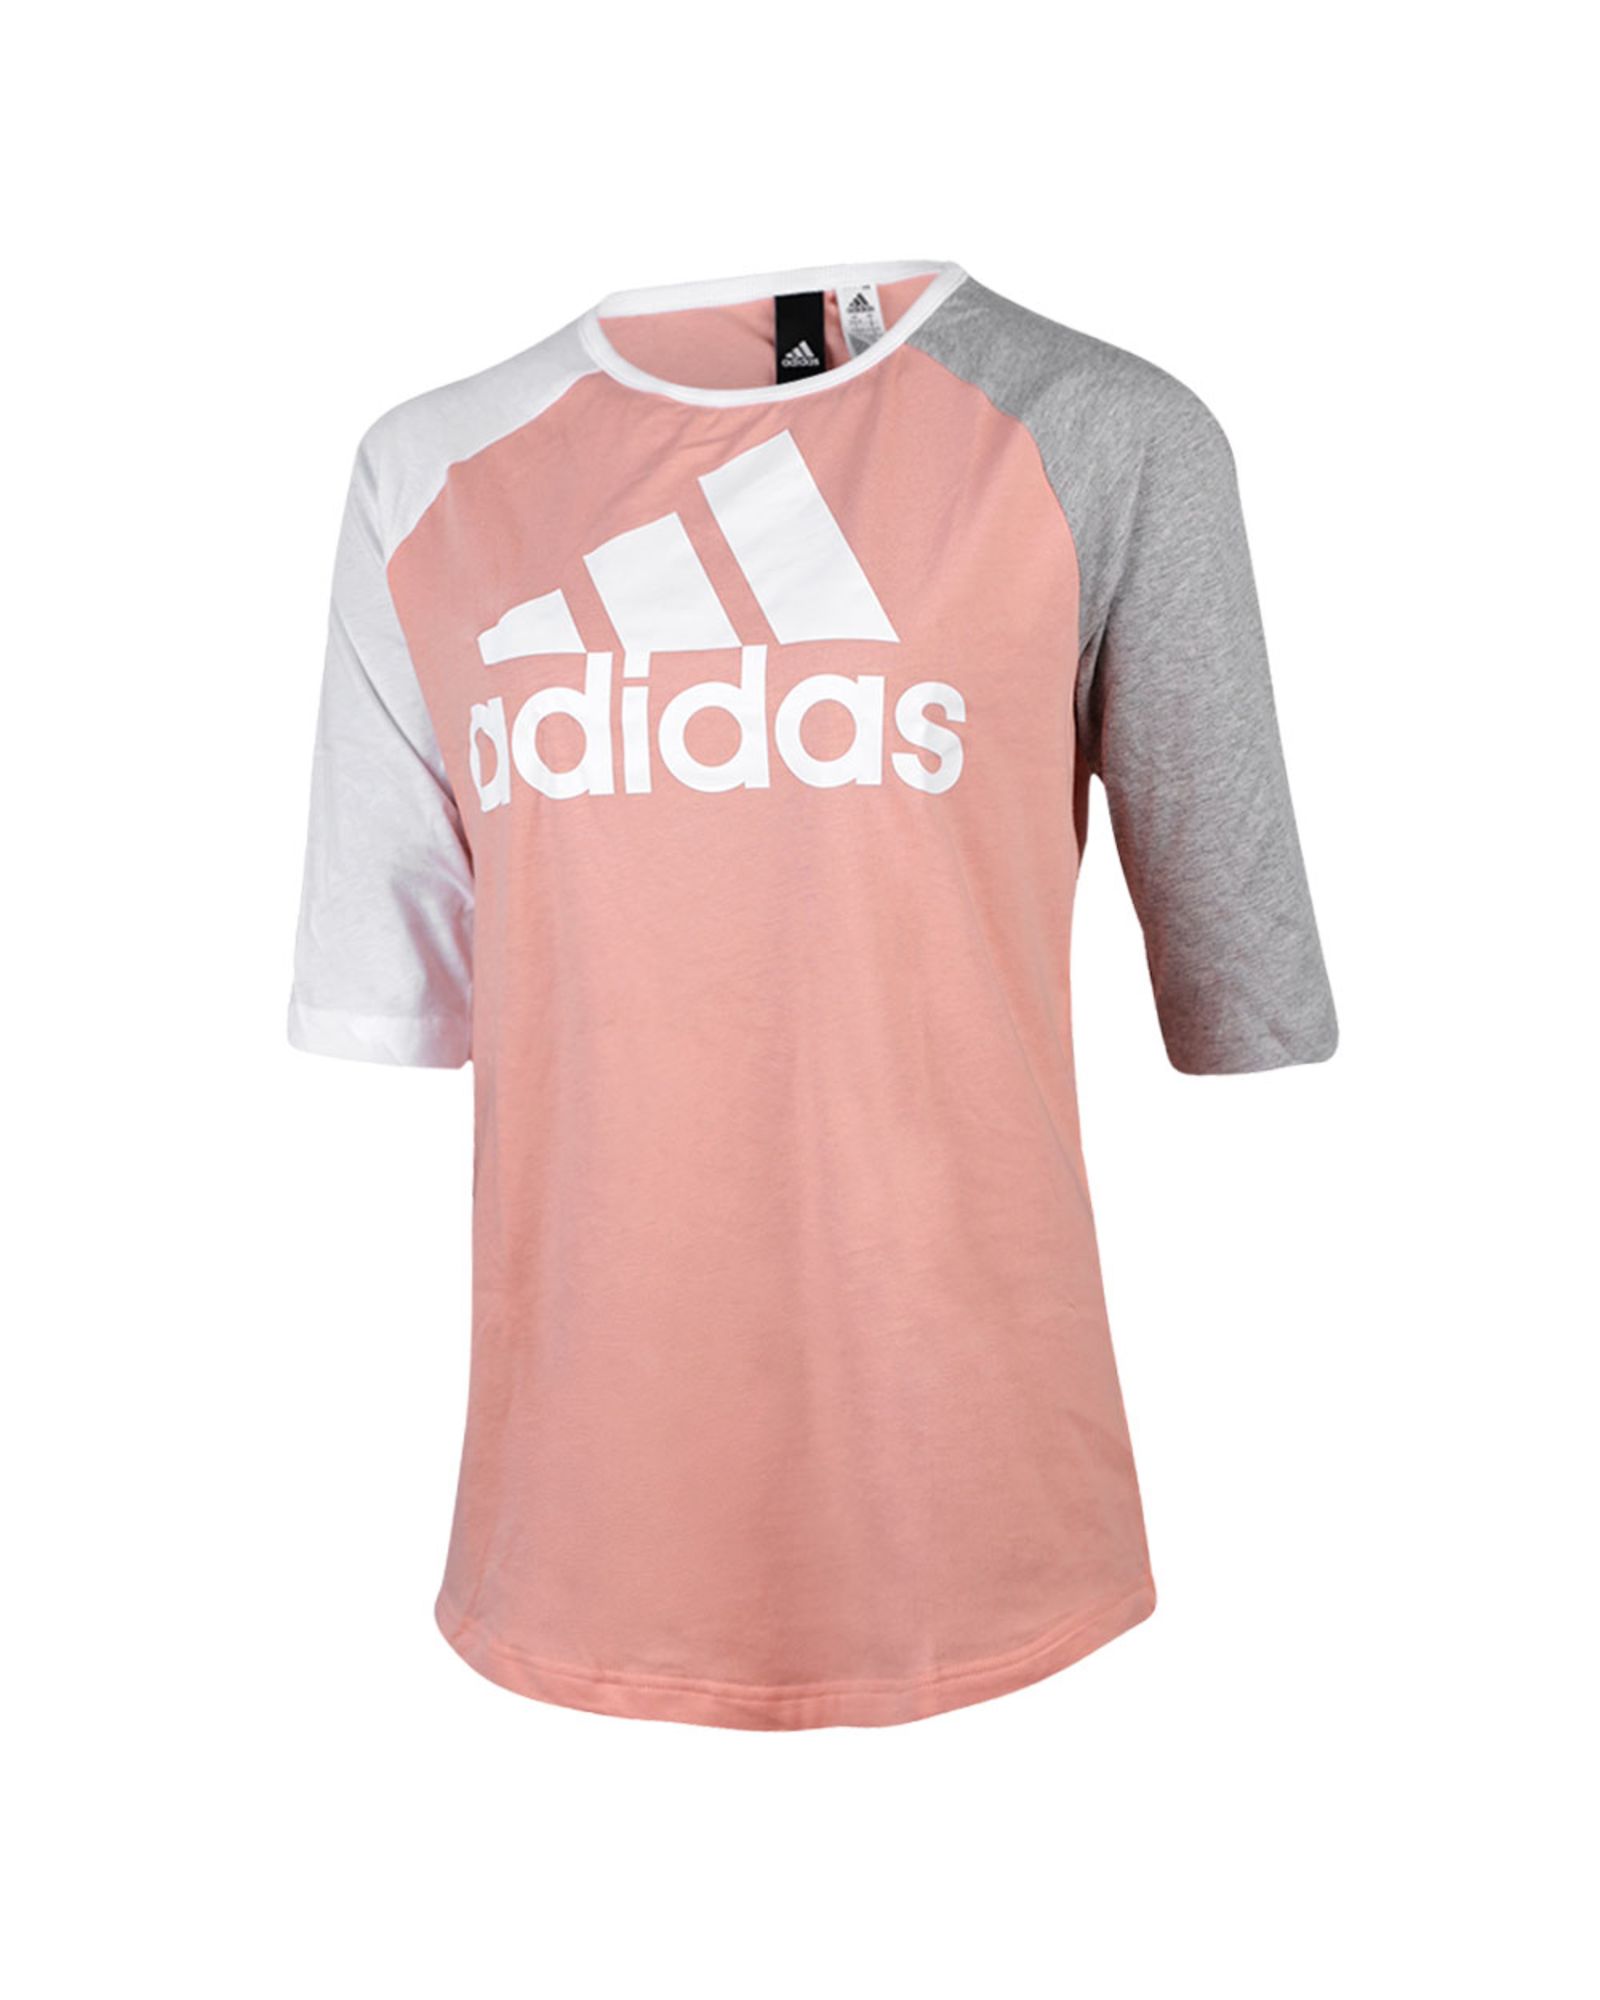 Camiseta de Paseo Baseball Mujer Rosa - Fútbol Factory